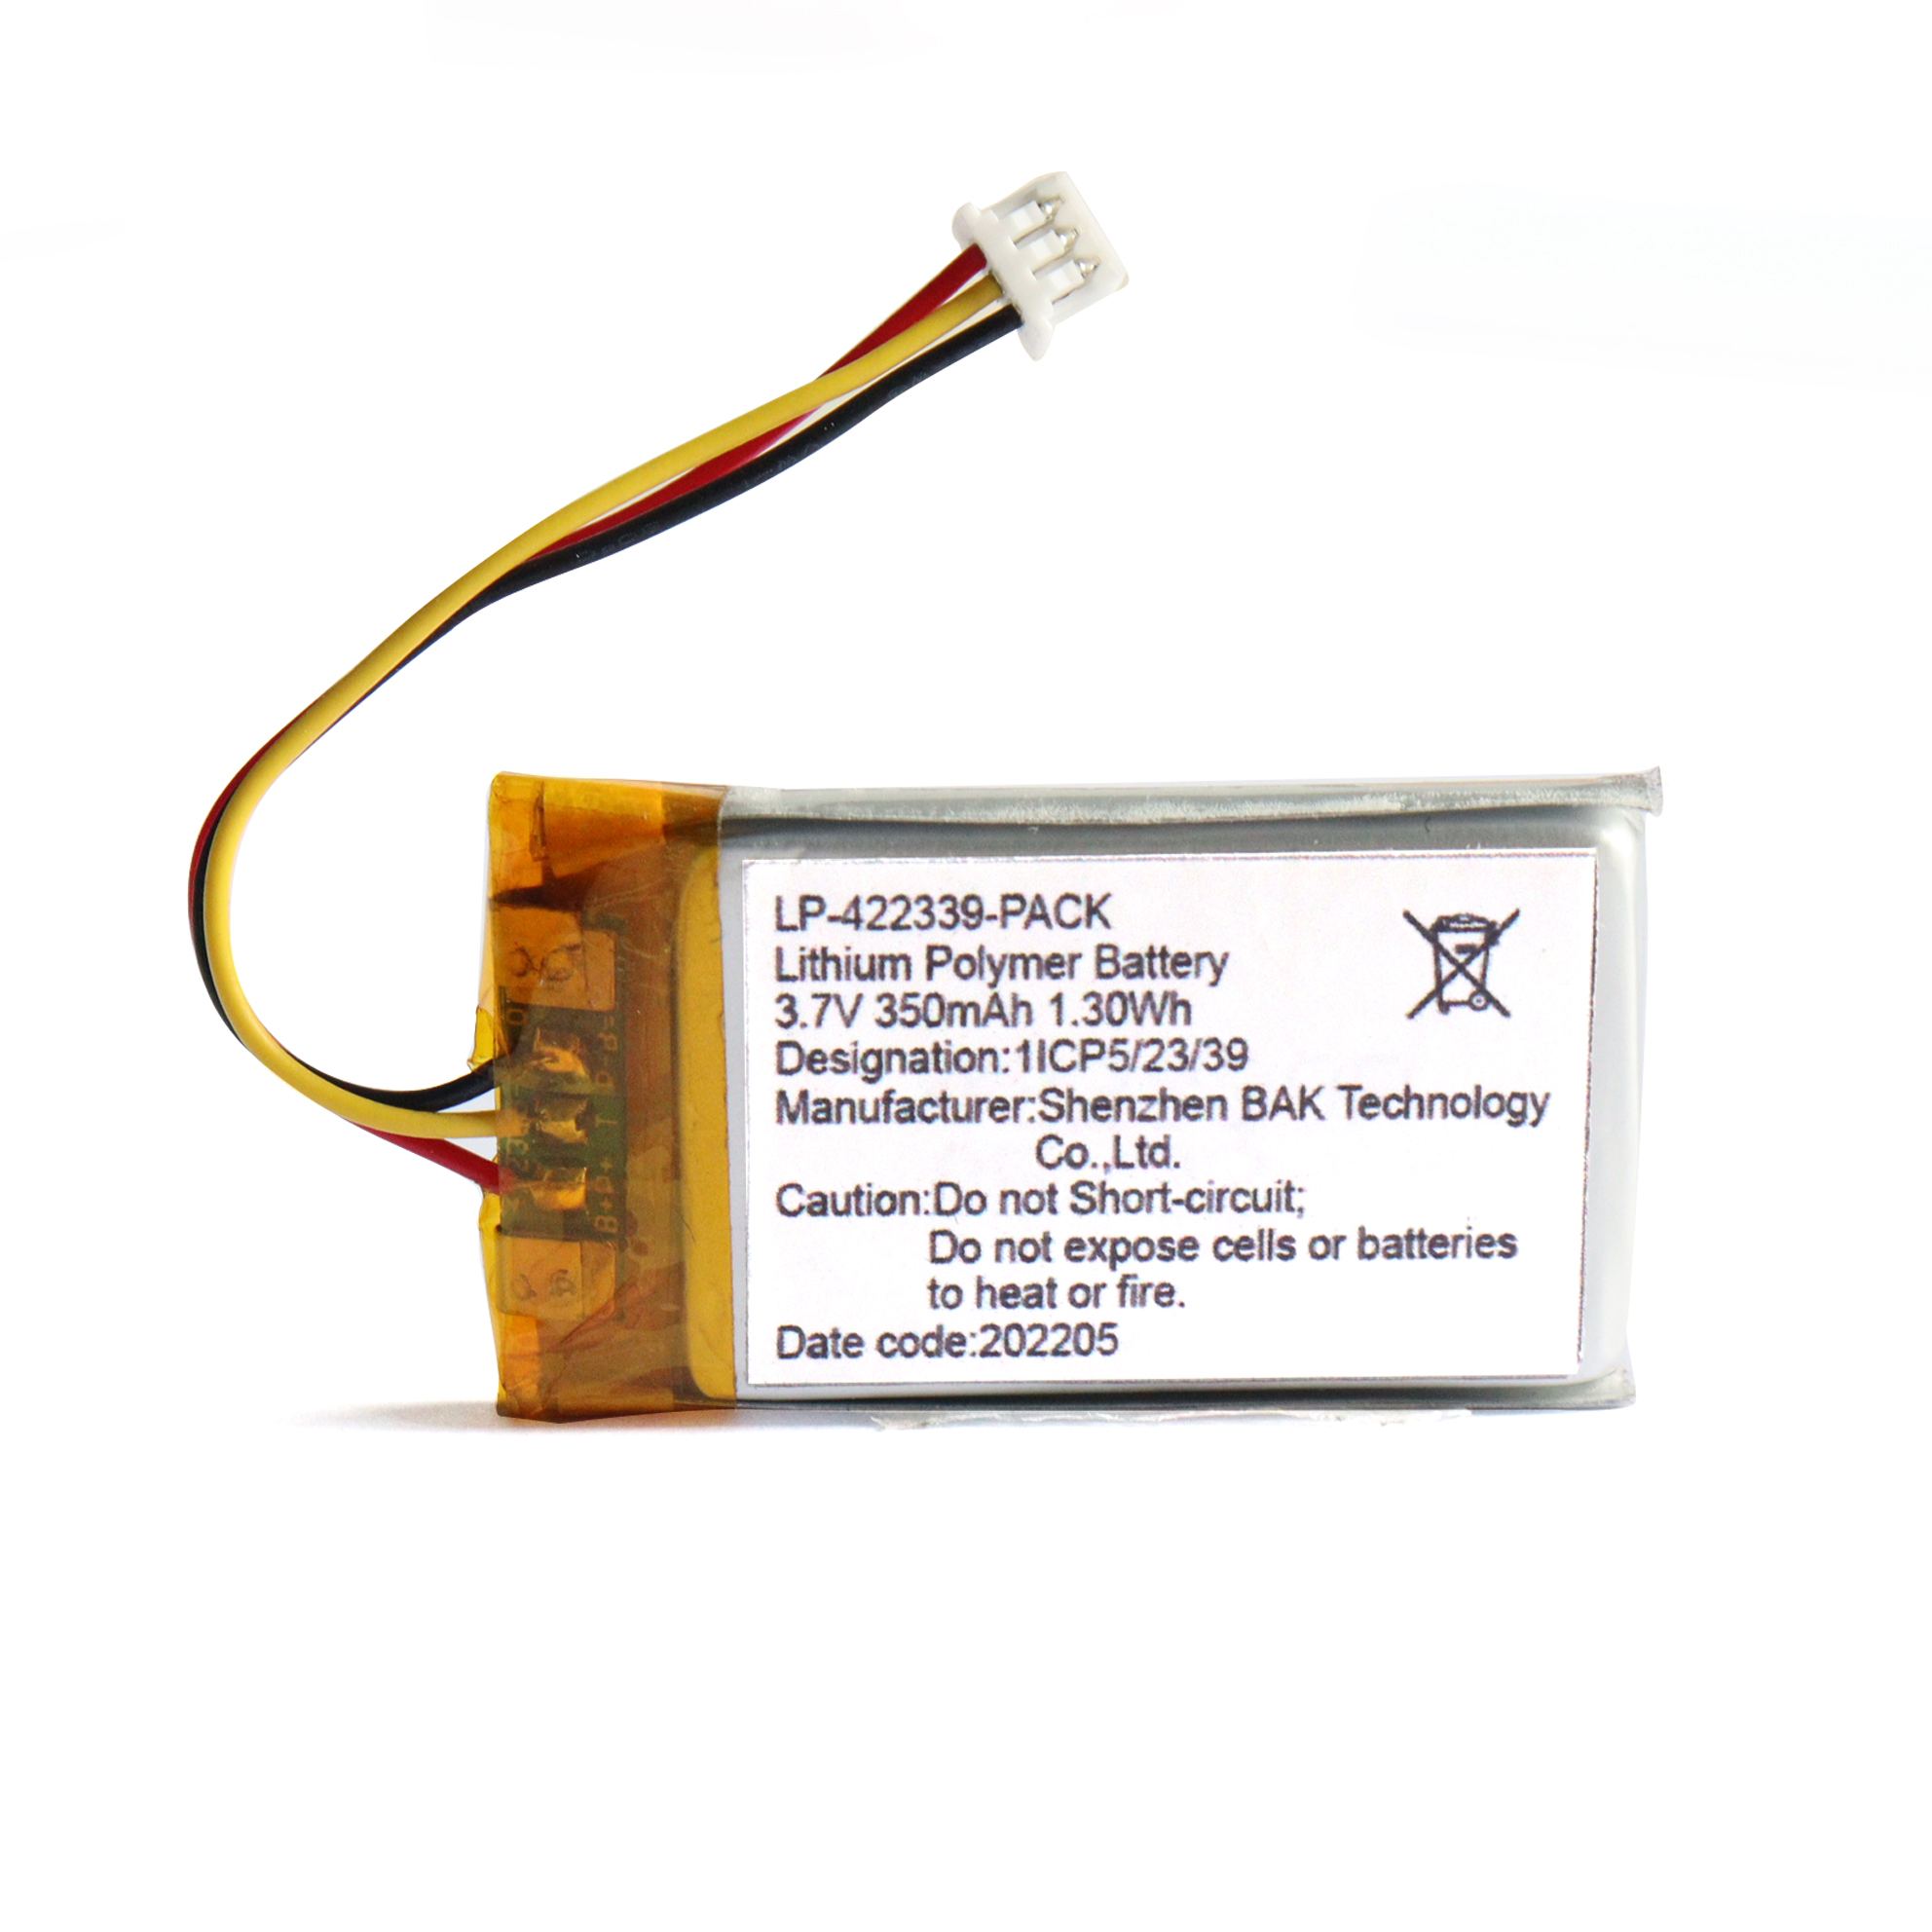 Lithiumpolymerbatterie 3.7v350mah für Bluetooth -Geräte